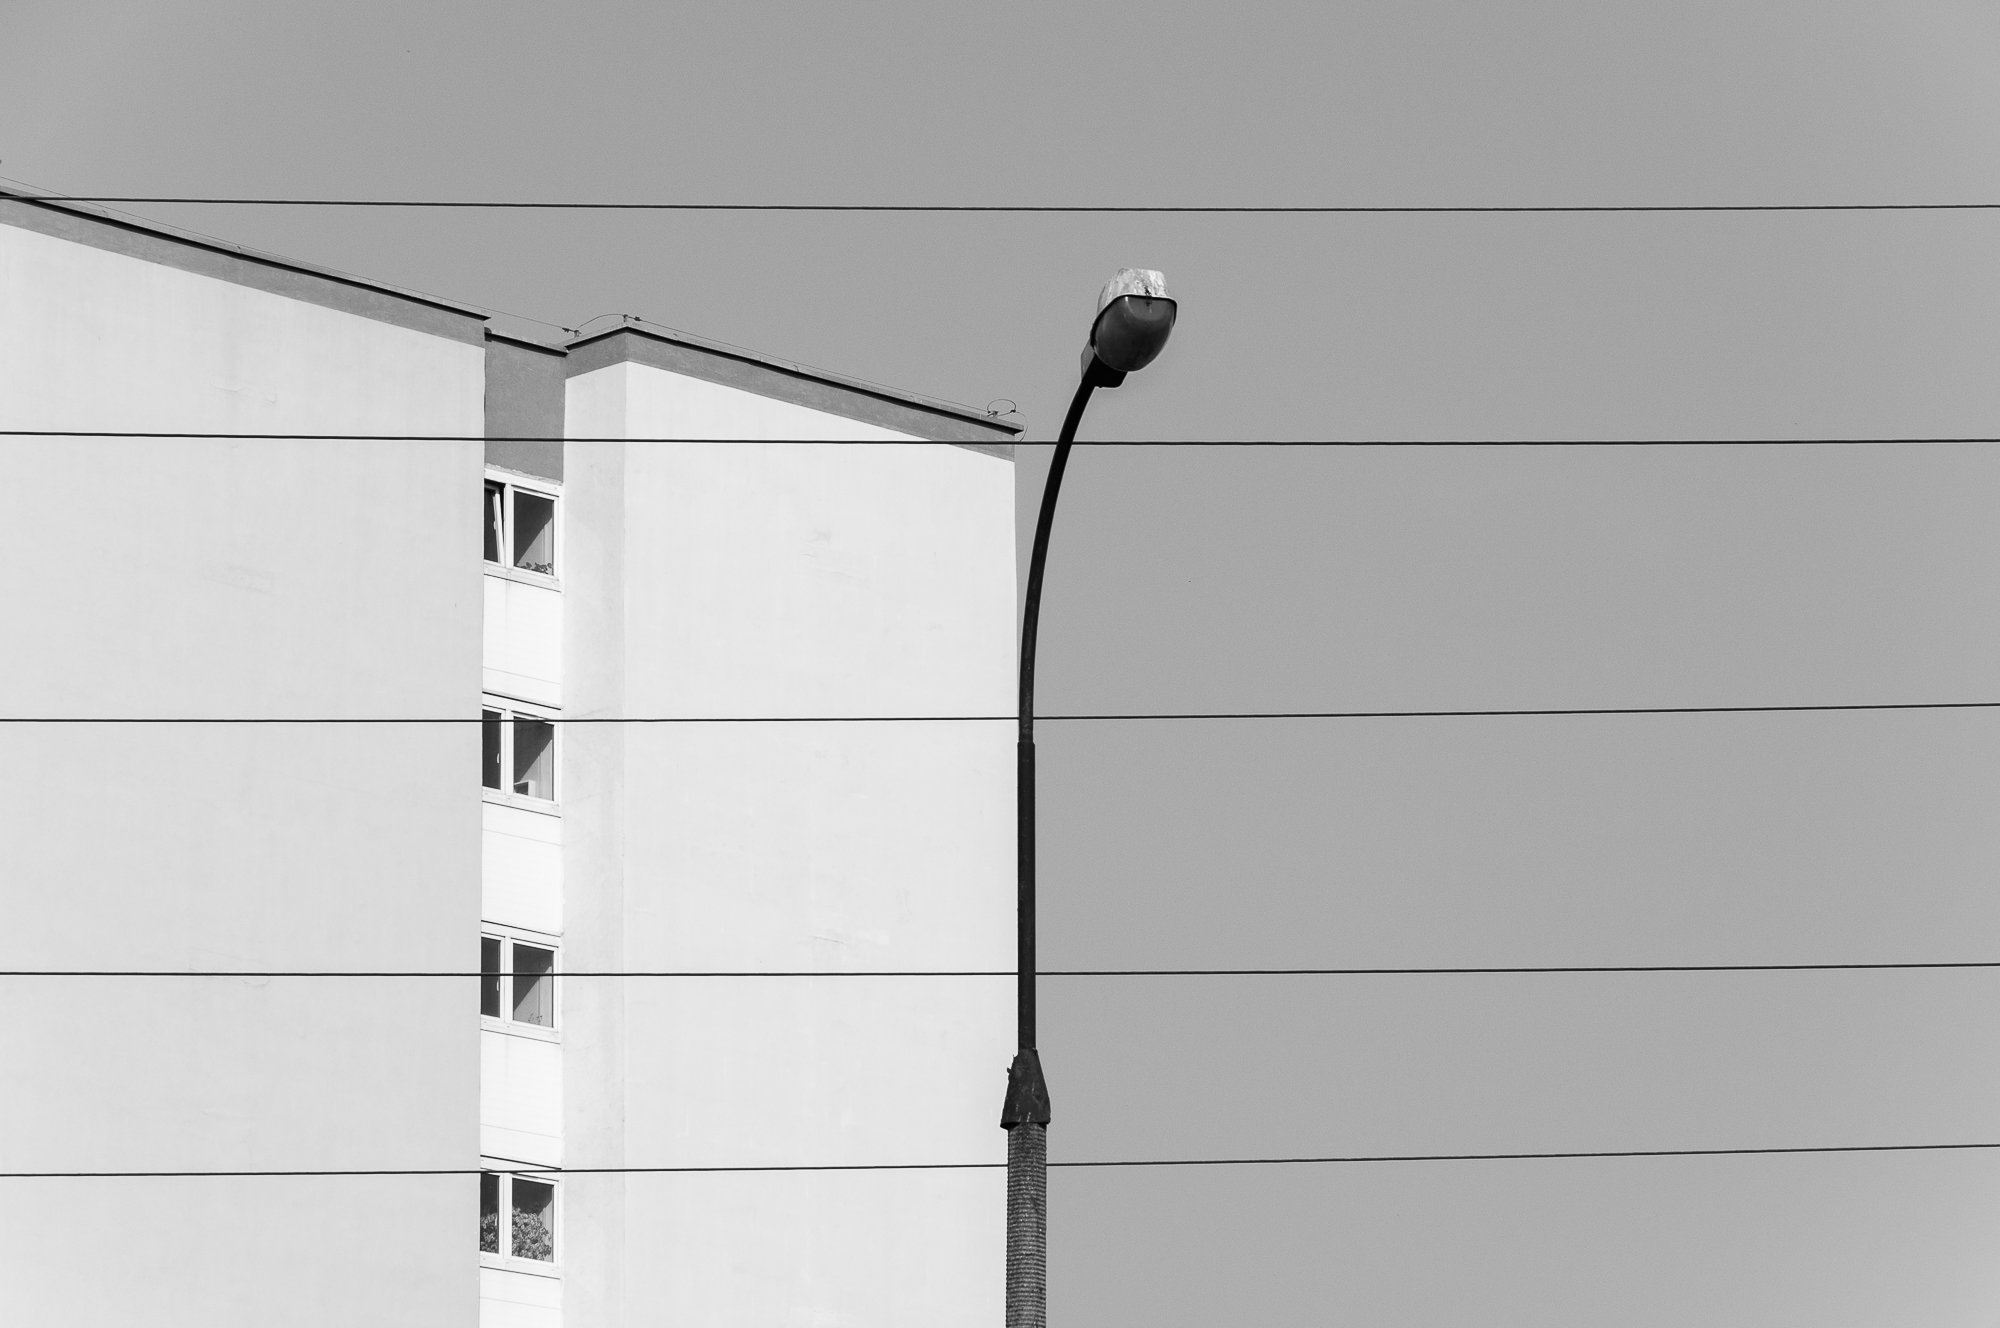 Adam Mazek Photography Warsaw (Warszawa) 2020. Post: "Writing in the late afternoon." Minimalism. Geometry. Street lamp.